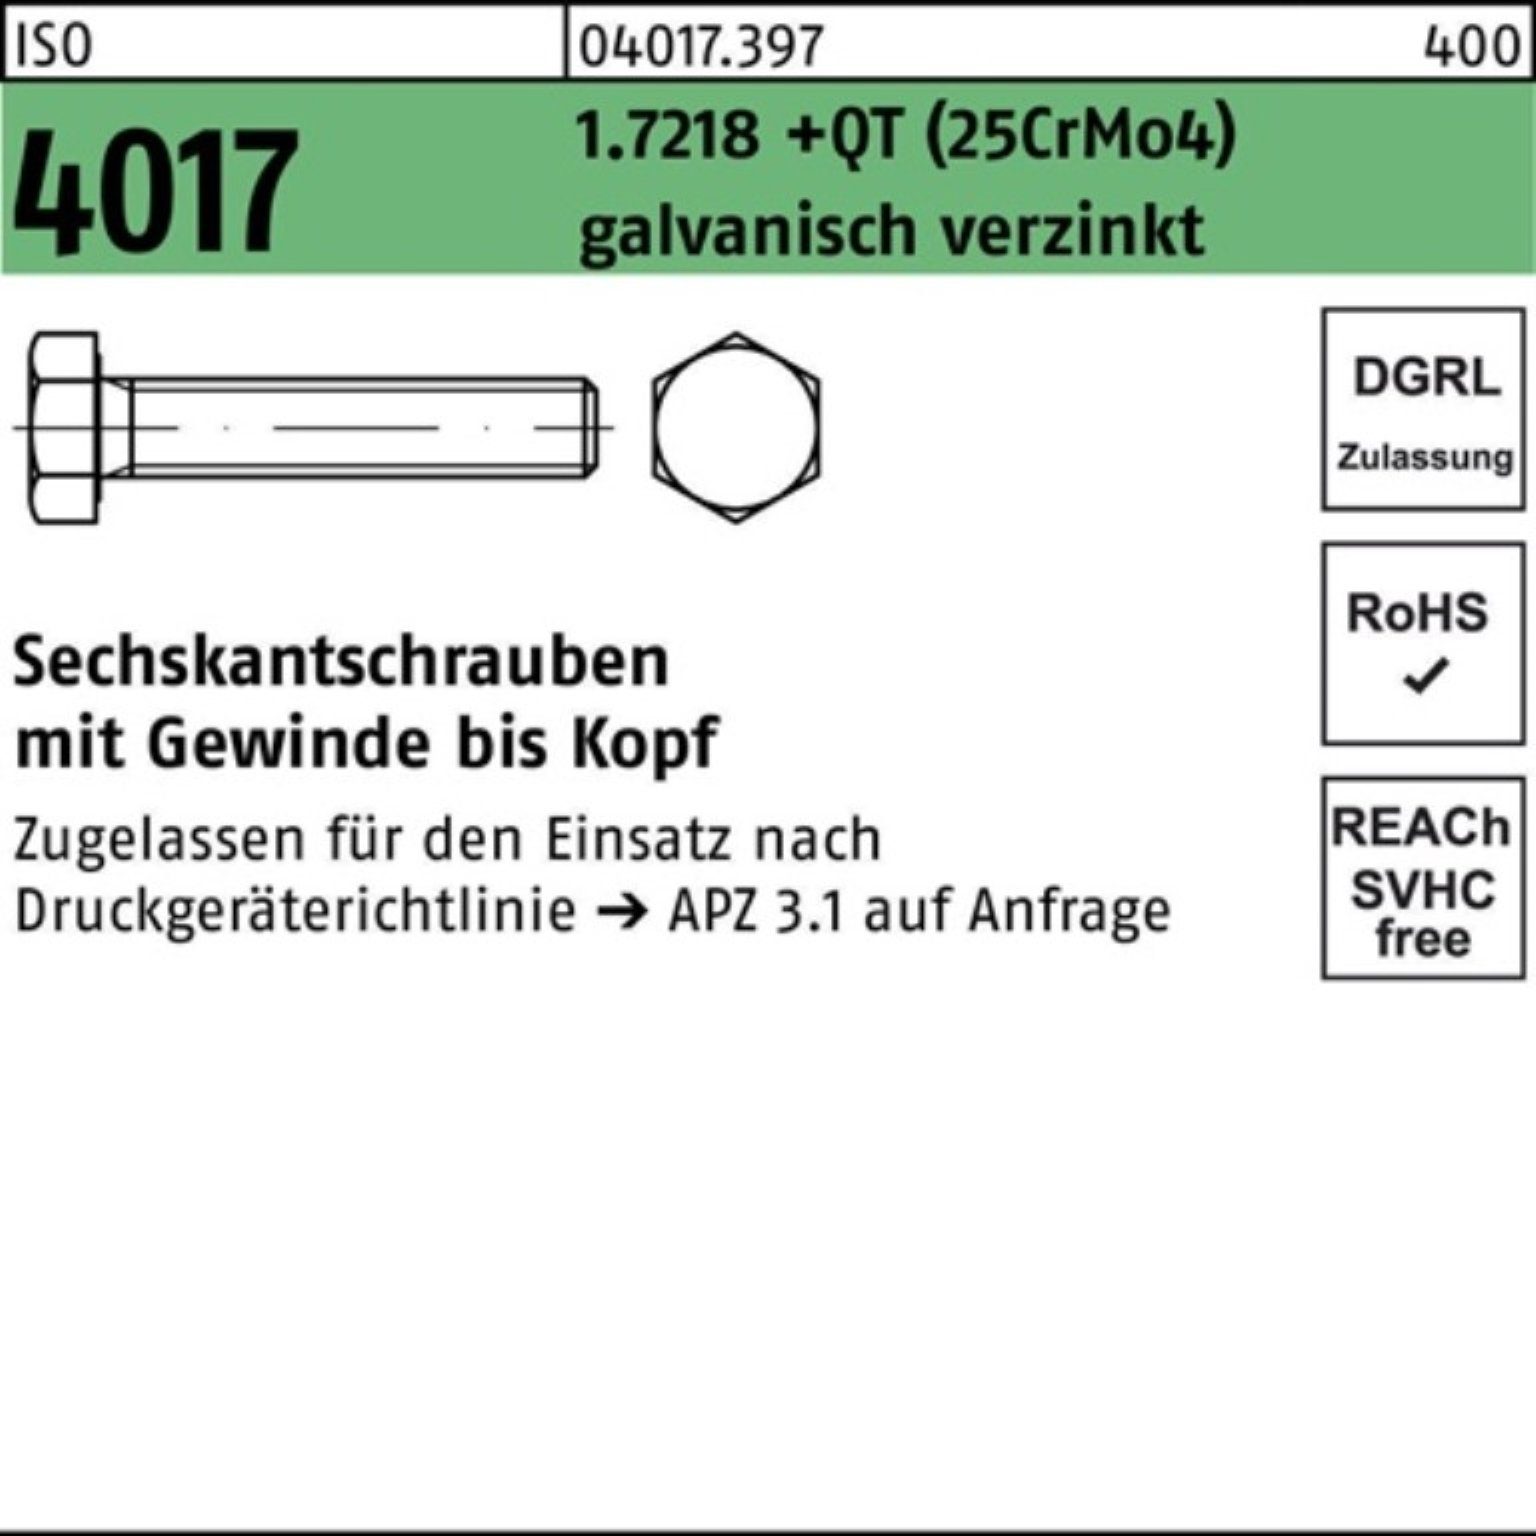 1.7218 Bufab M20x100 +QT Pack 4017 VG Sechskantschraube 100er (25CrMo4) Sechskantschraube ISO